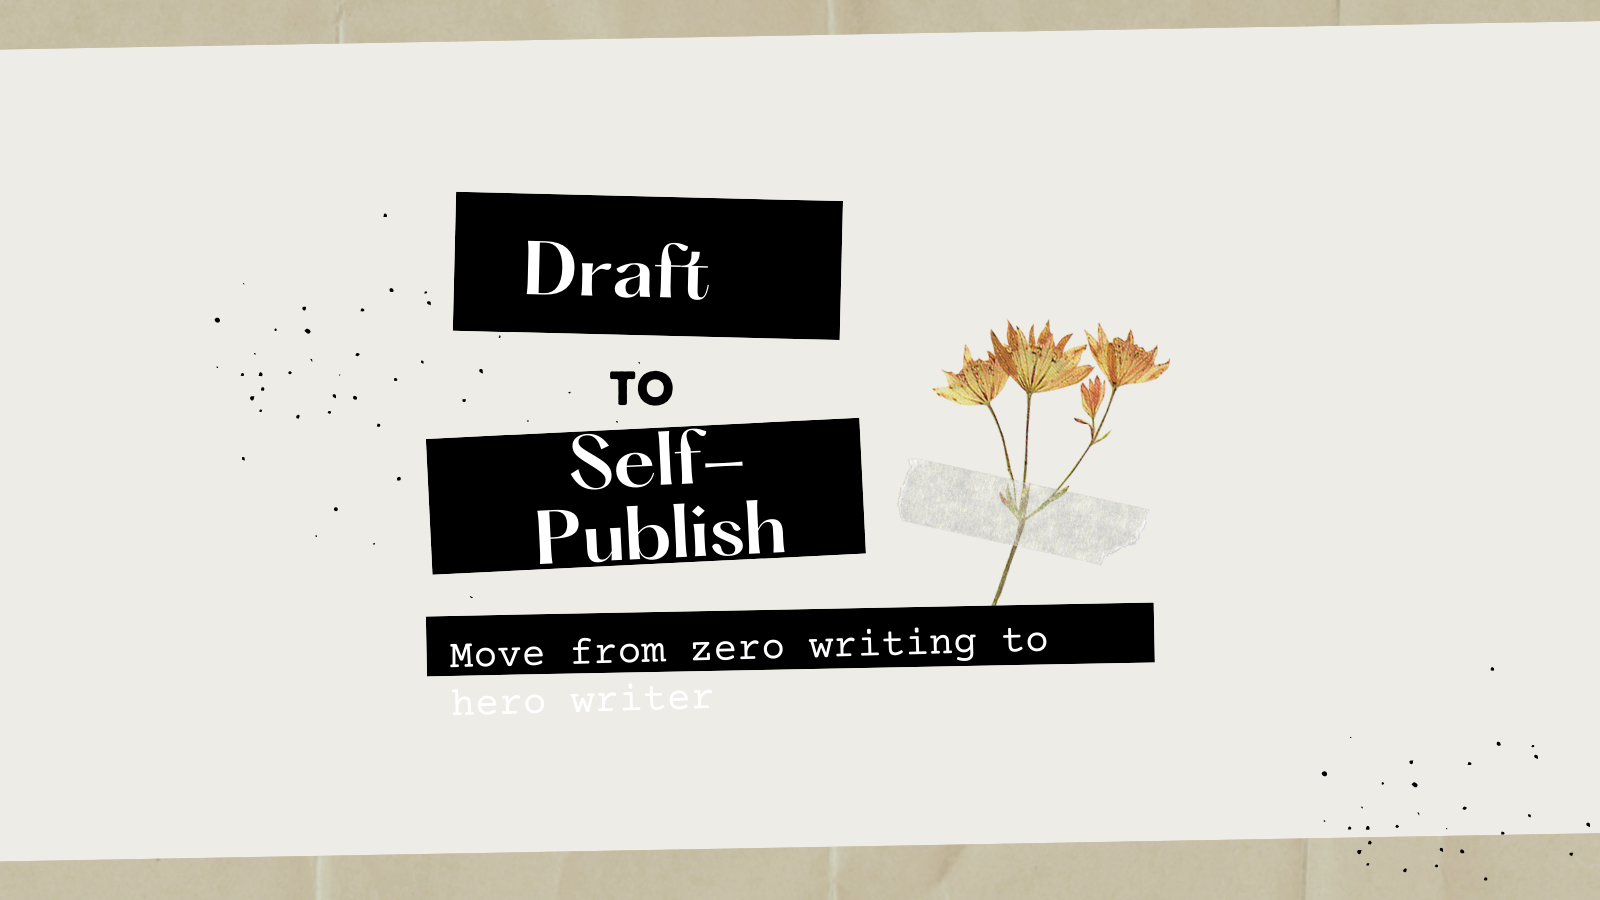 Draft 2 self-publish